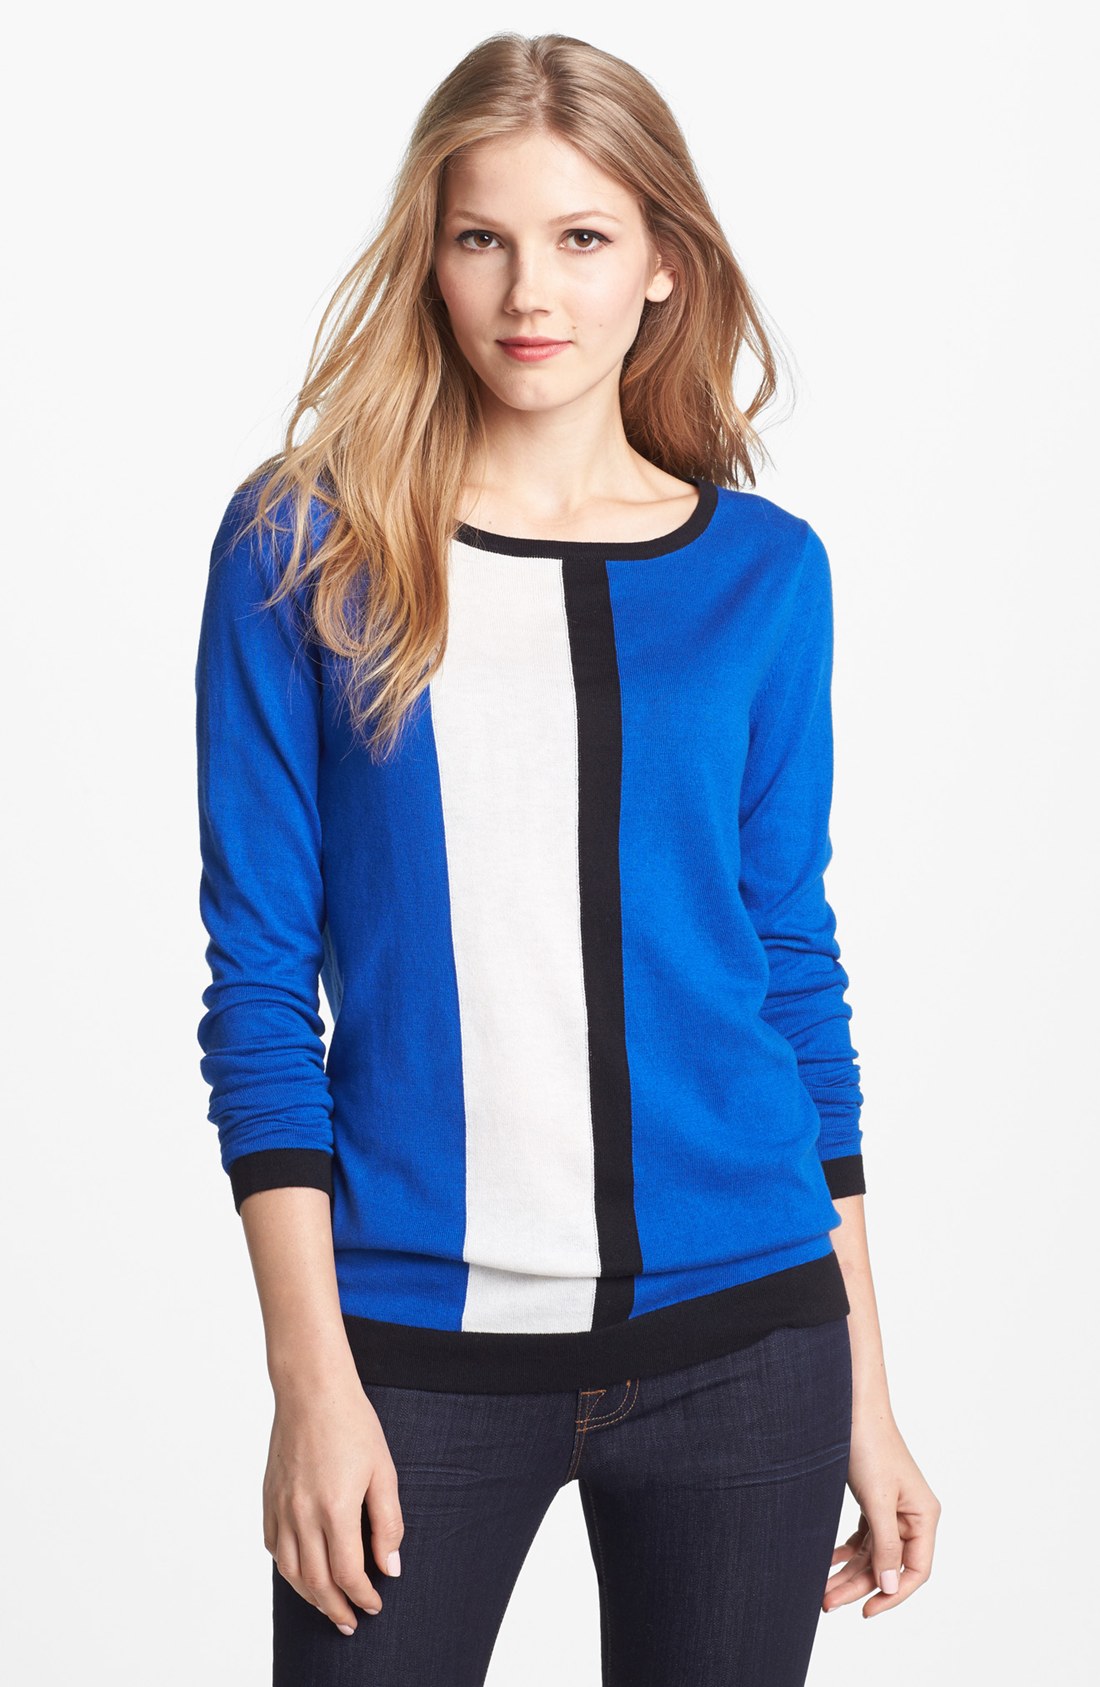 Vince Camuto Vertical Stripe Color Block Cotton Blend Sweater in Blue